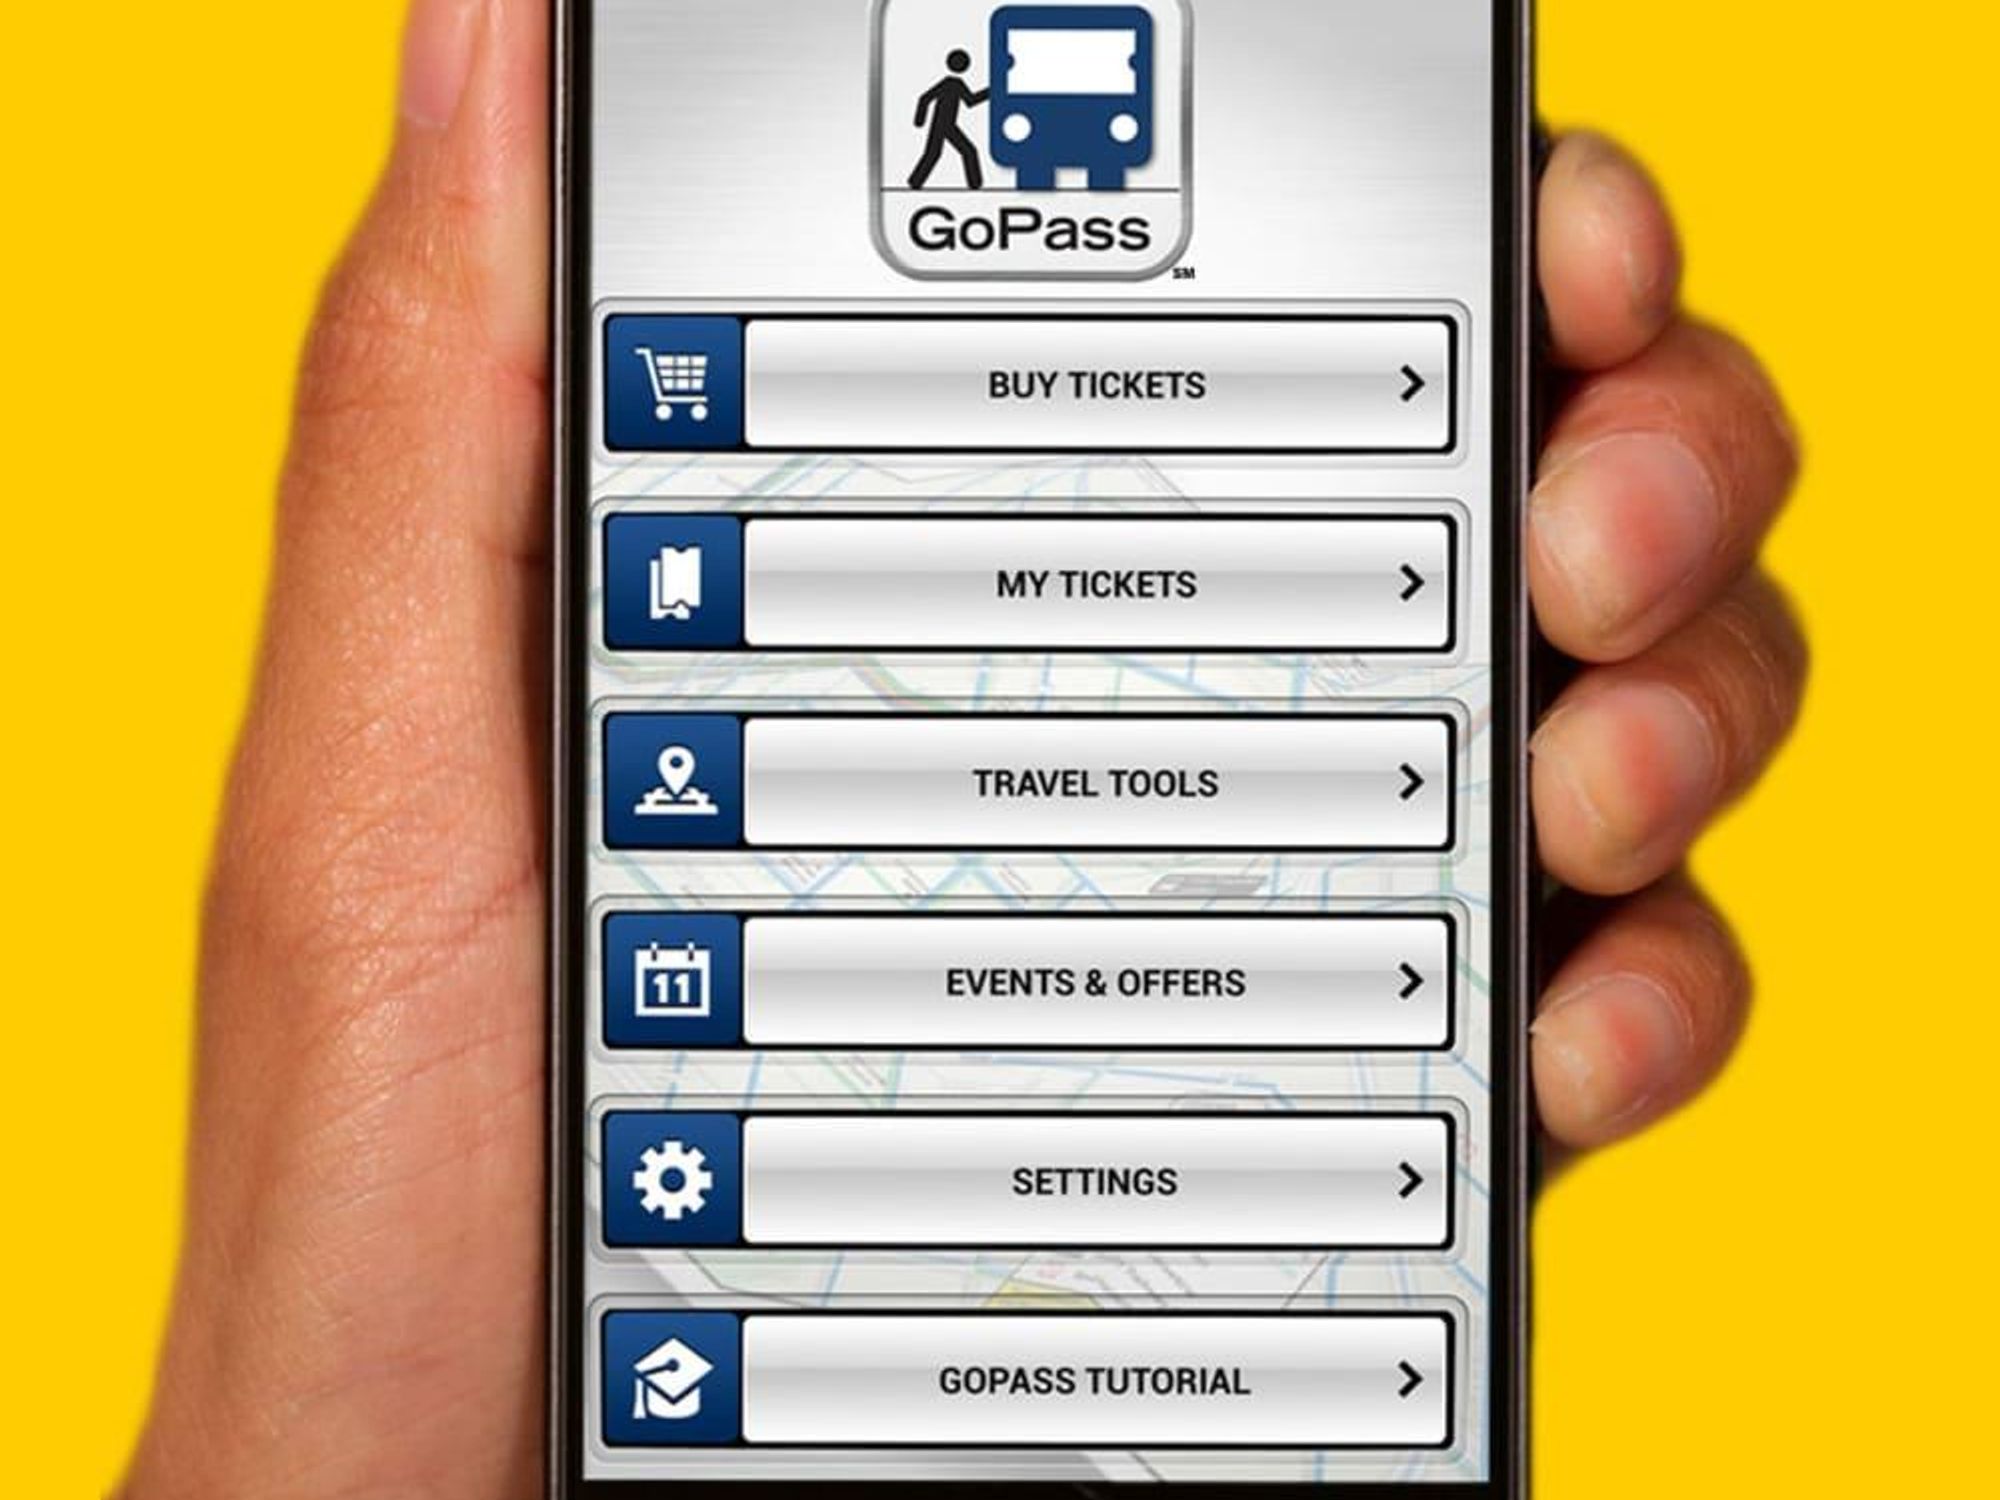 DART GoPass mobile ticketing app